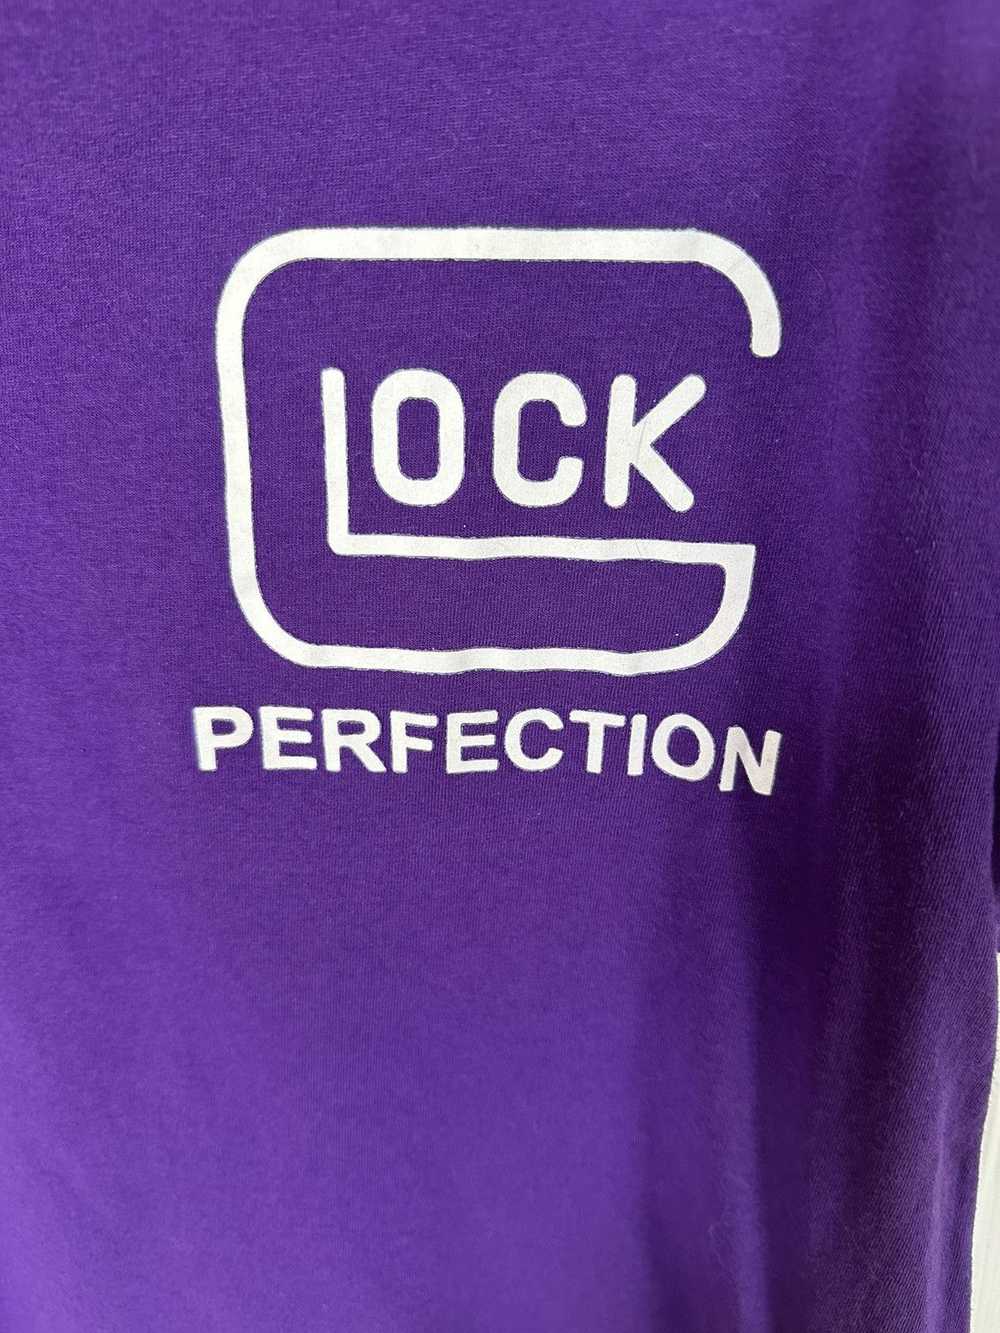 Gildan × Streetwear Glock Perfection Tee T-Shirt - image 2